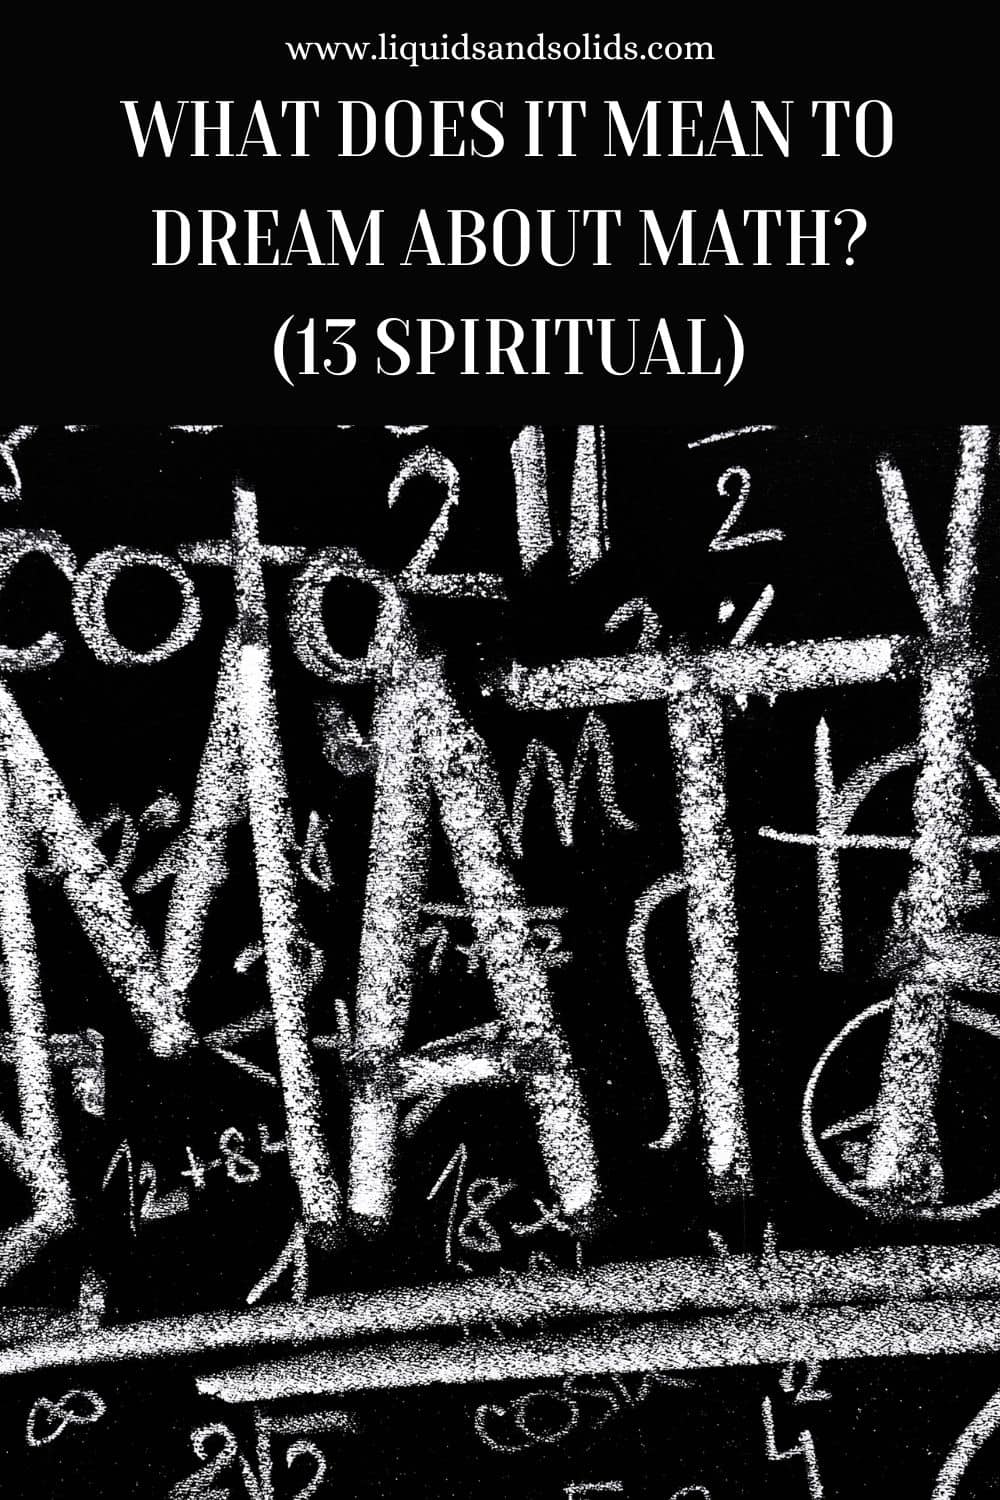  Rêver de mathématiques (13 significations spirituelles)